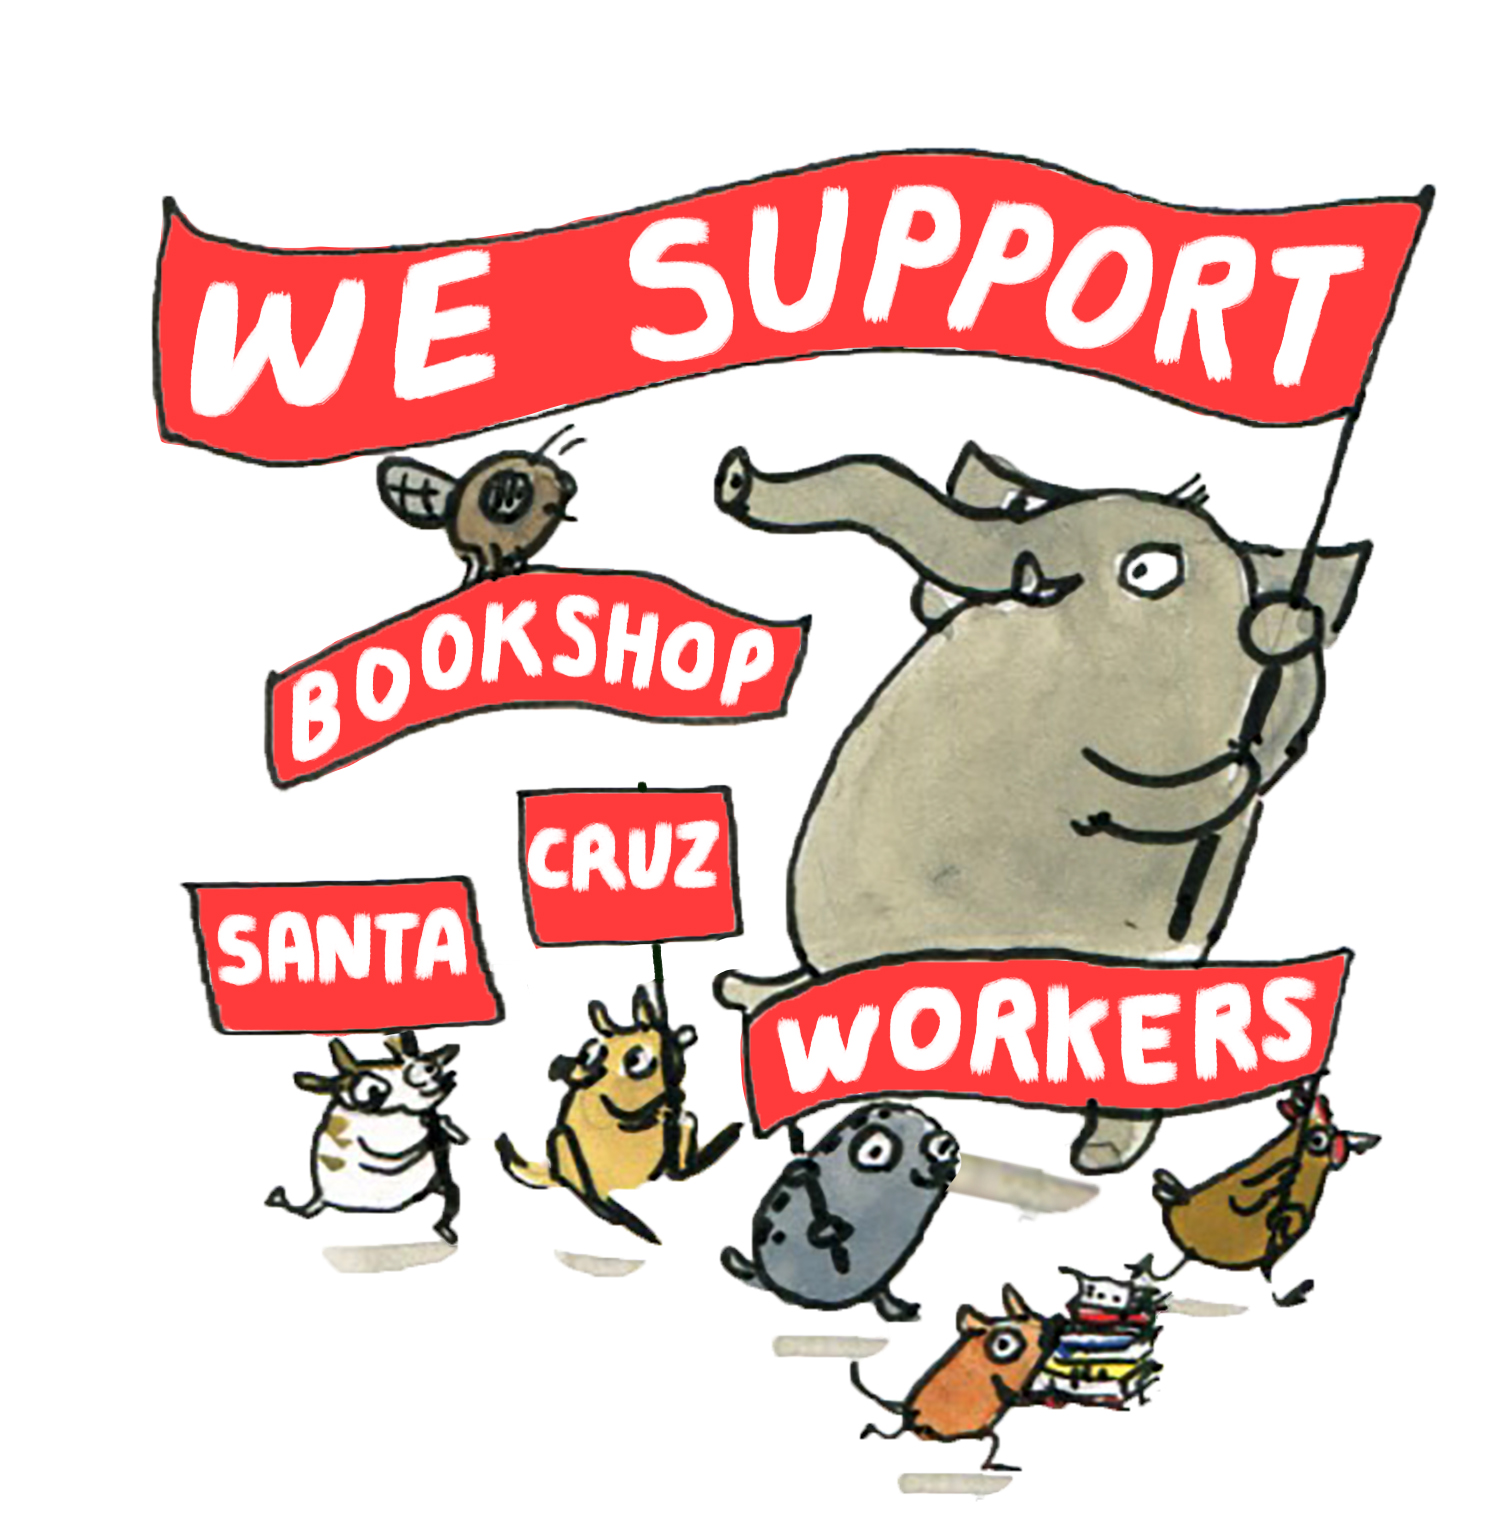 Illustration: We Support Bookshop Santa Cruz Workers